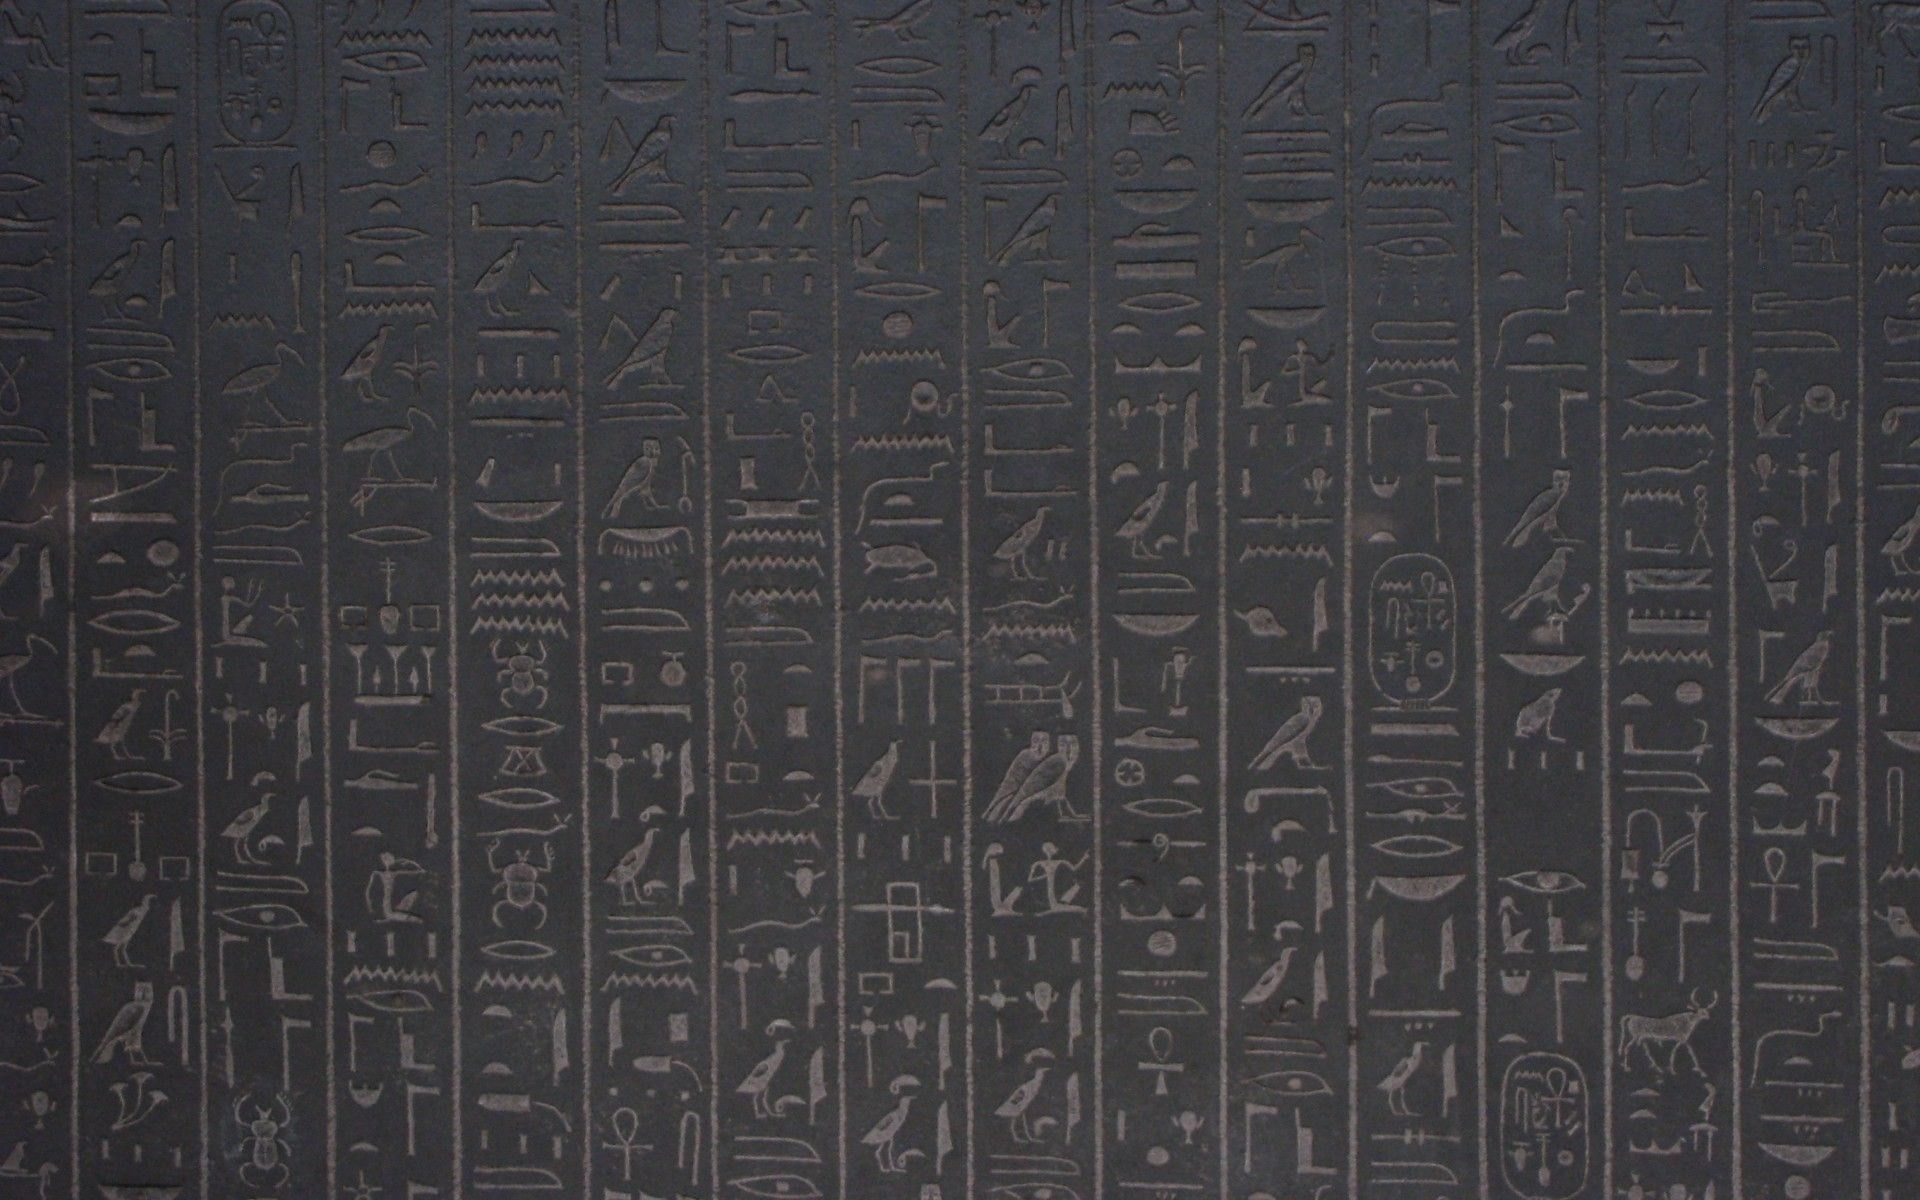 Egyptian Hieroglyphics Backgrounds Free Download  PixelsTalkNet